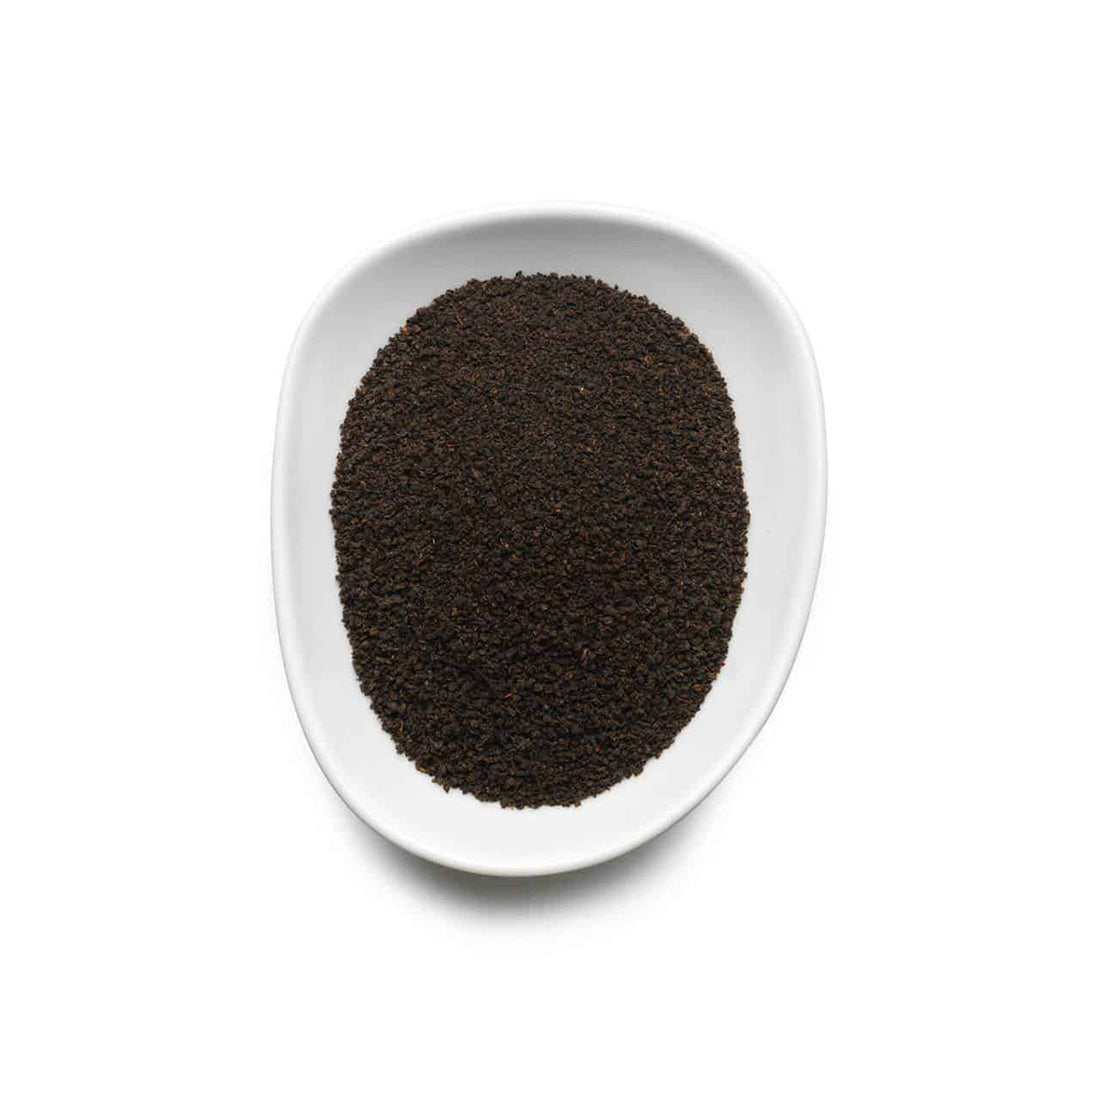 Birchall, Birchall Plant-Based Prism Tea Bags 15pcs - Great Rift Breakfast Blend (RFA Certified), Redber Coffee